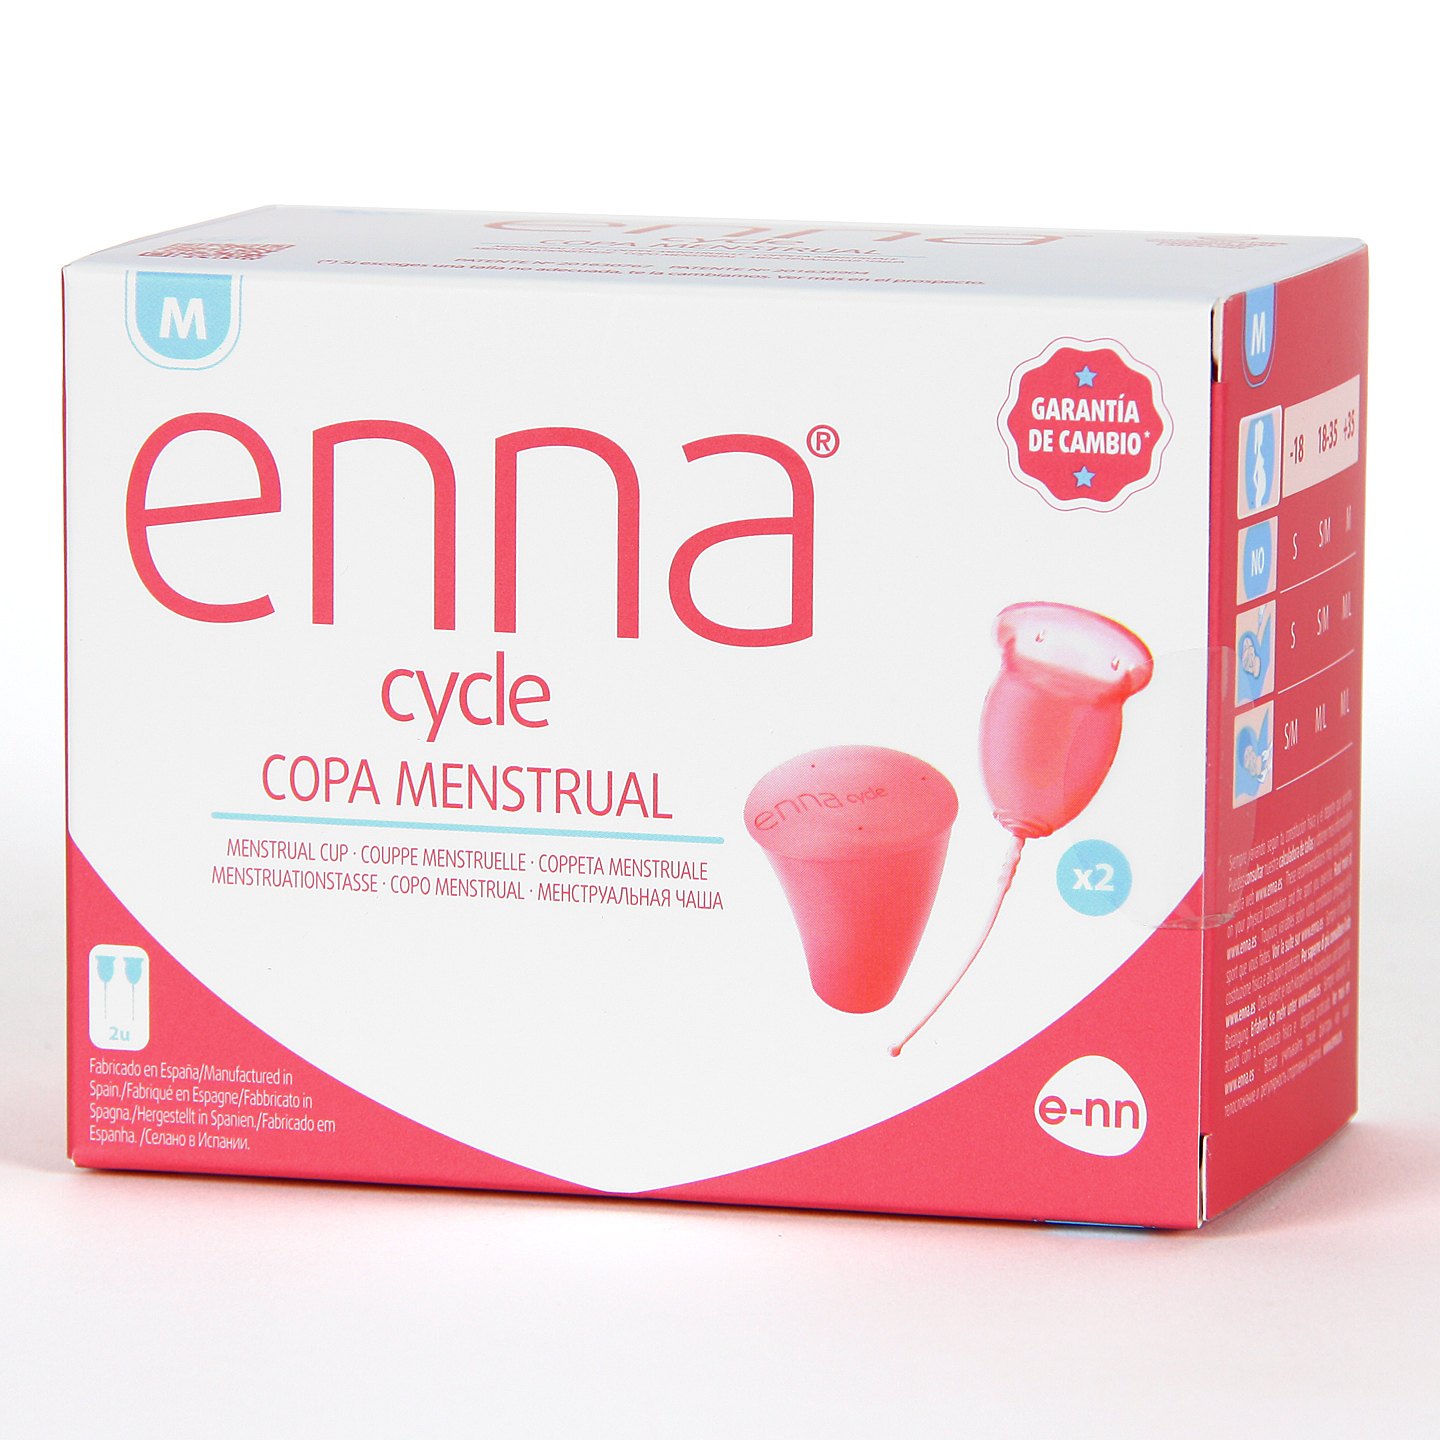 Copa menstrual Enna M